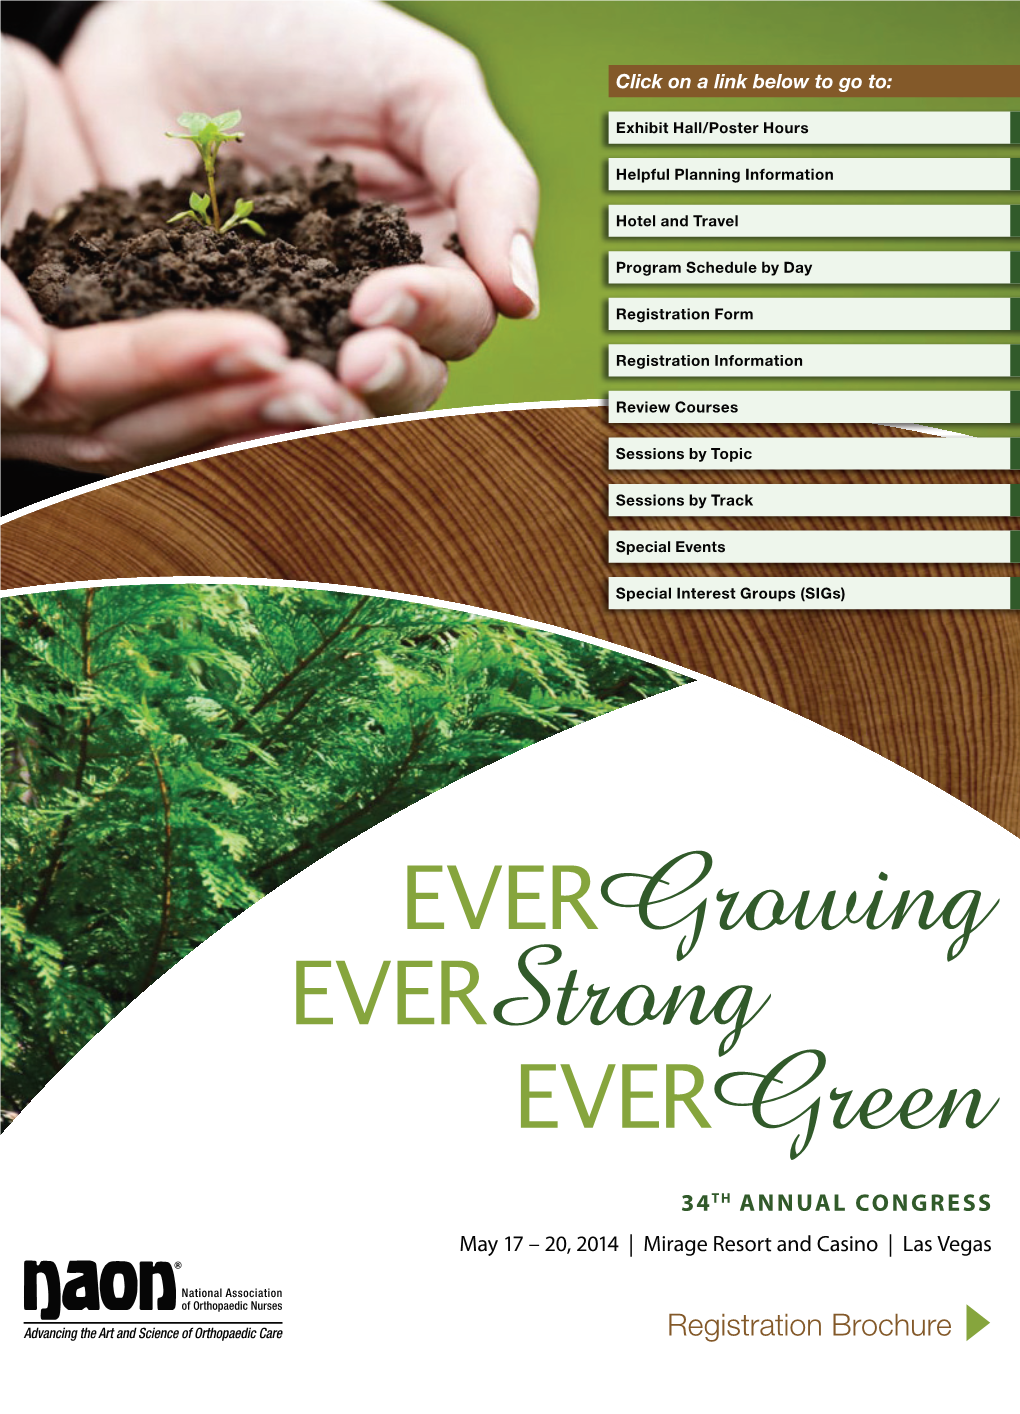 Evergreen Evergrowing Everstrong